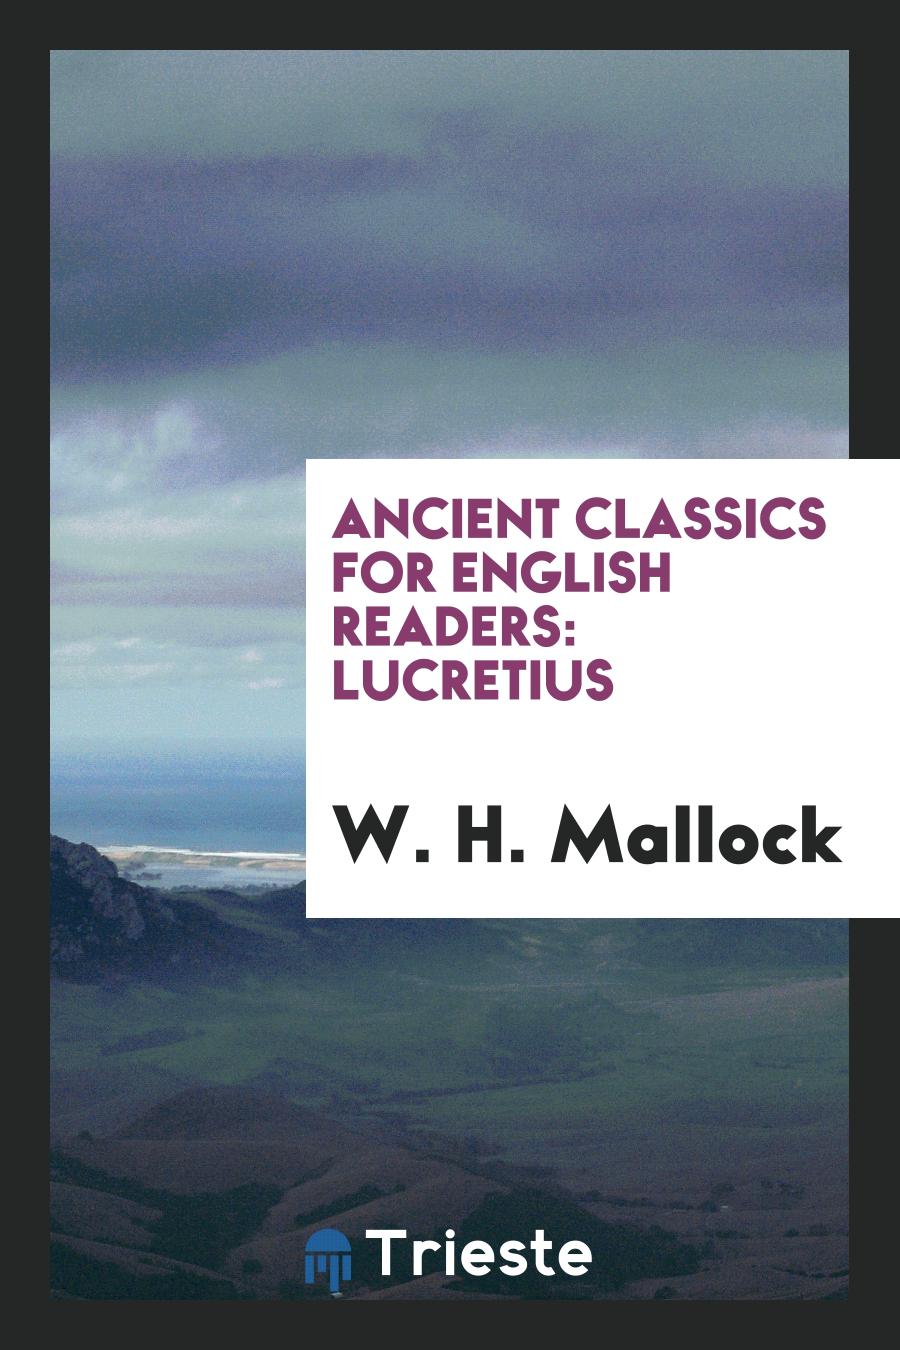 Ancient Classics for English Readers: Lucretius